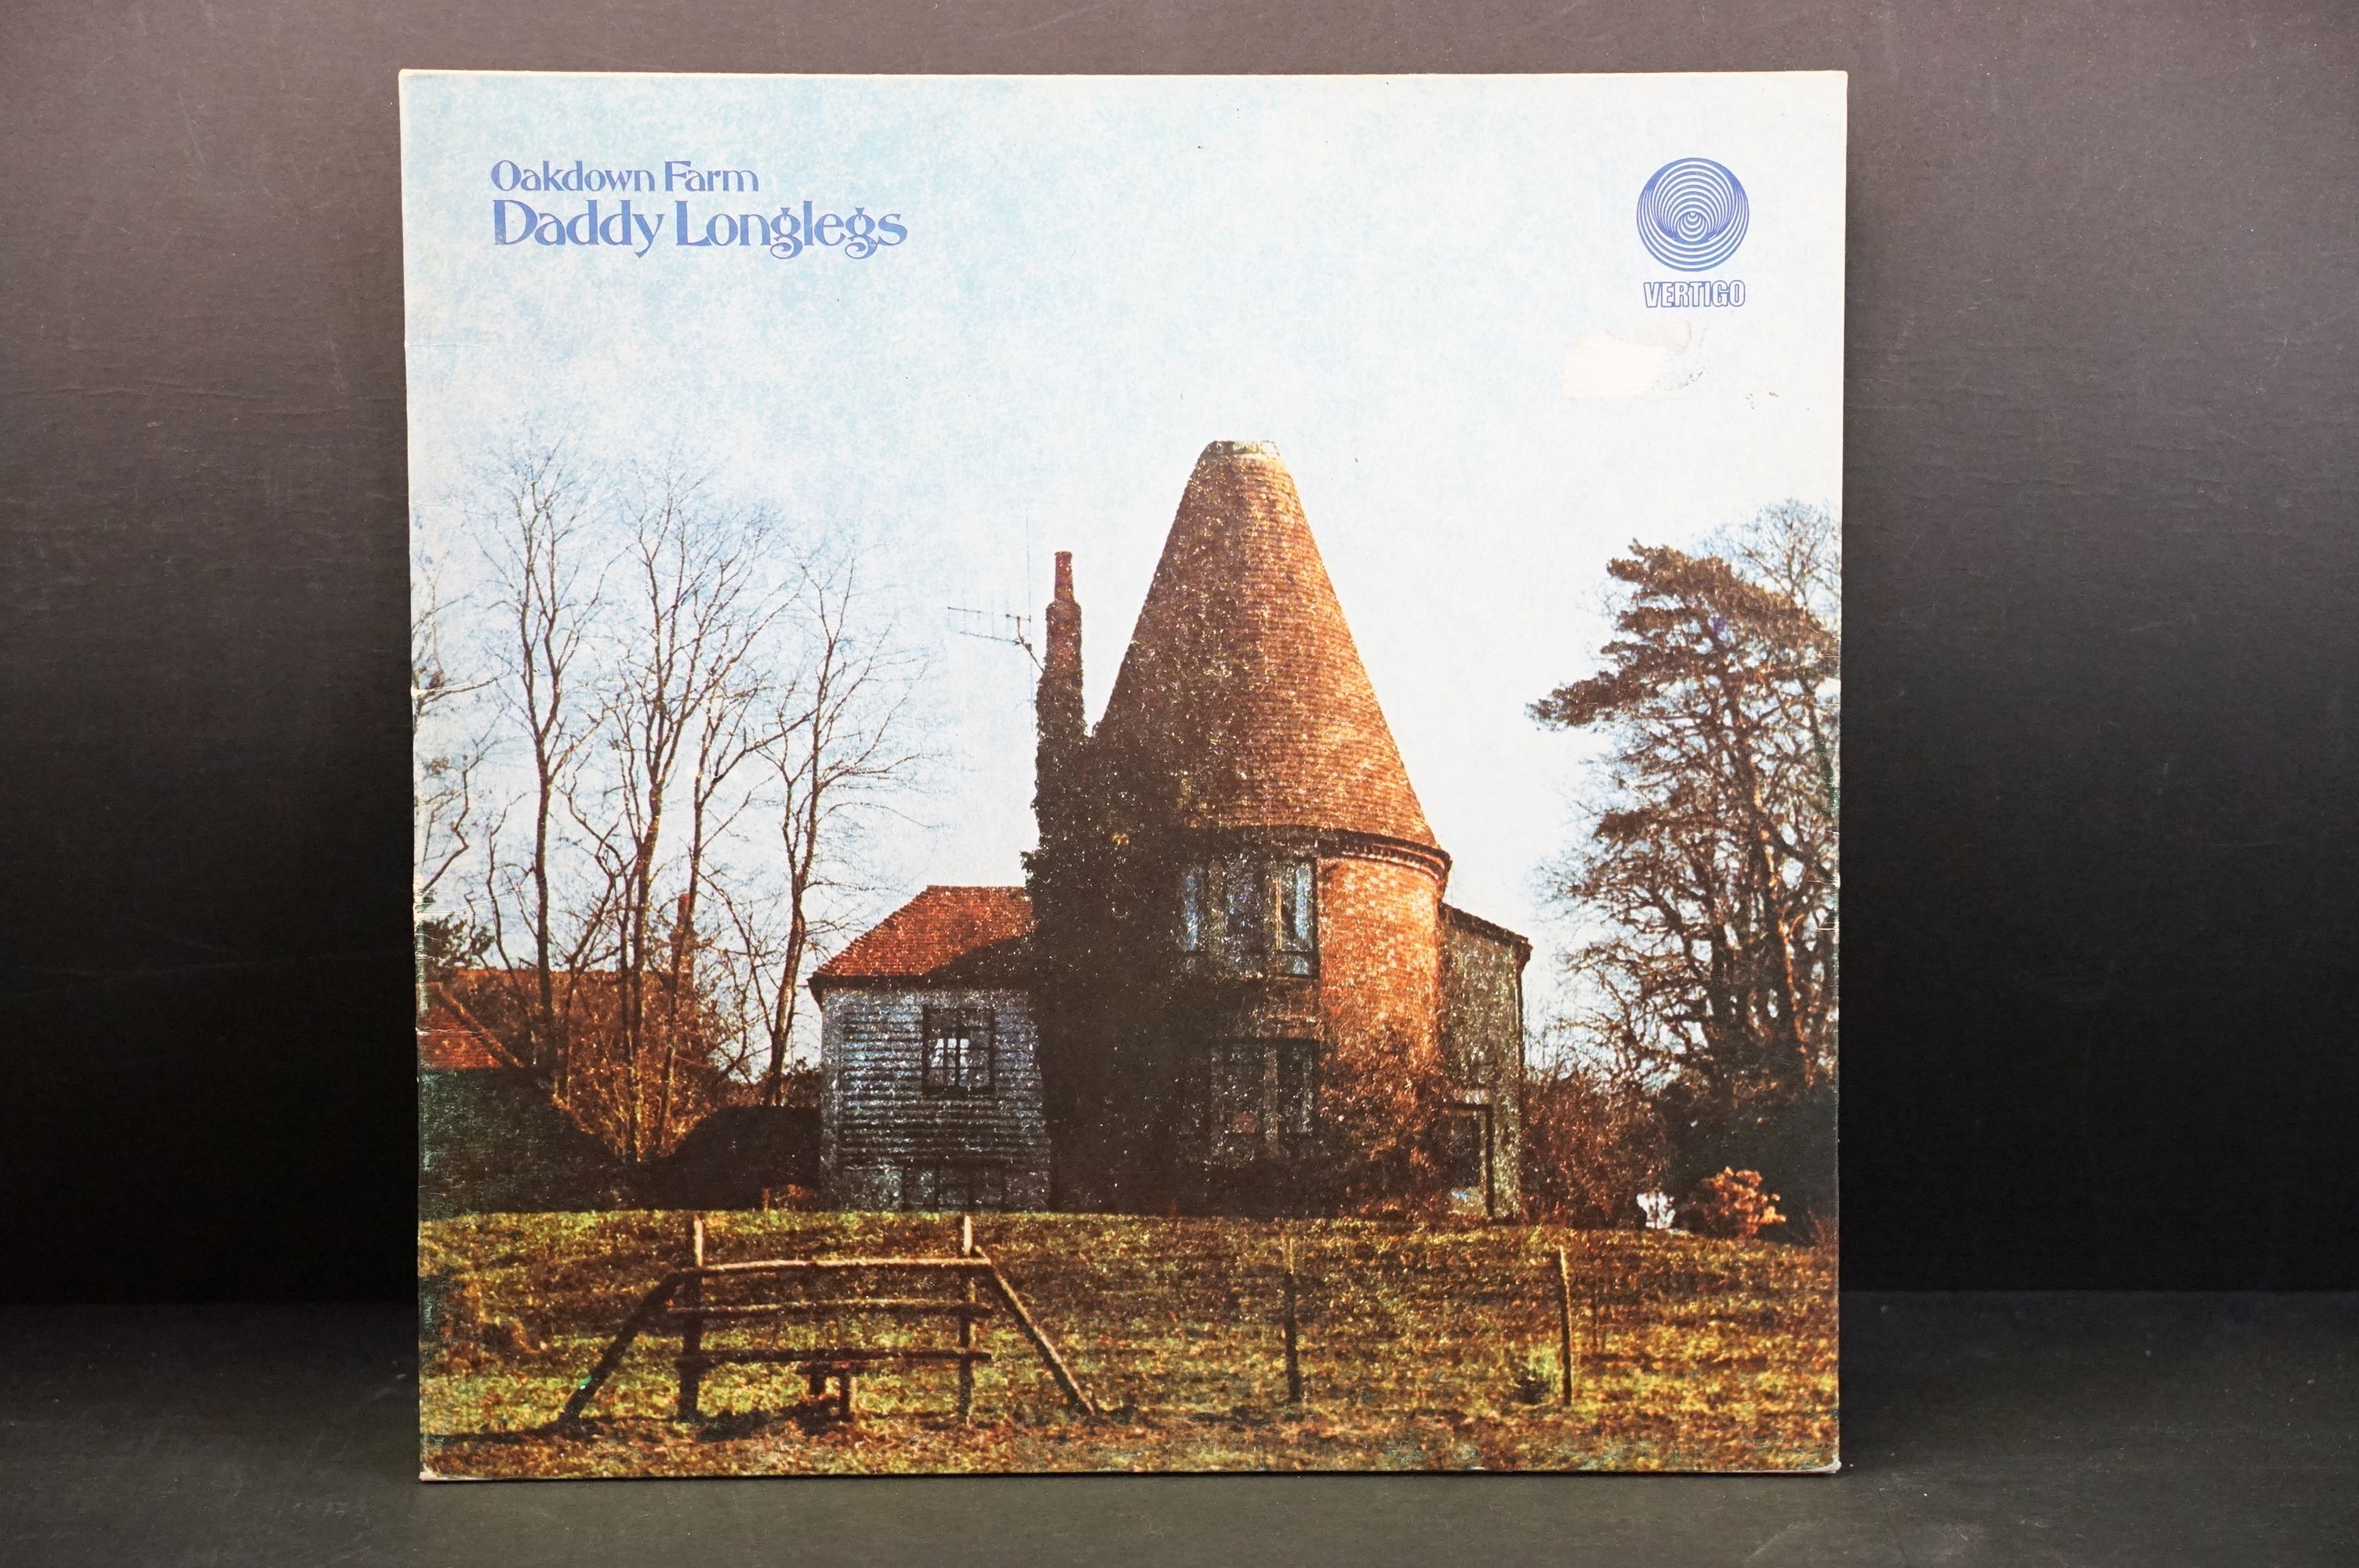 Vinyl - Daddy Longlegs – Oakdown Farm, original UK 1971 1st pressing, large vertigo swirl, with